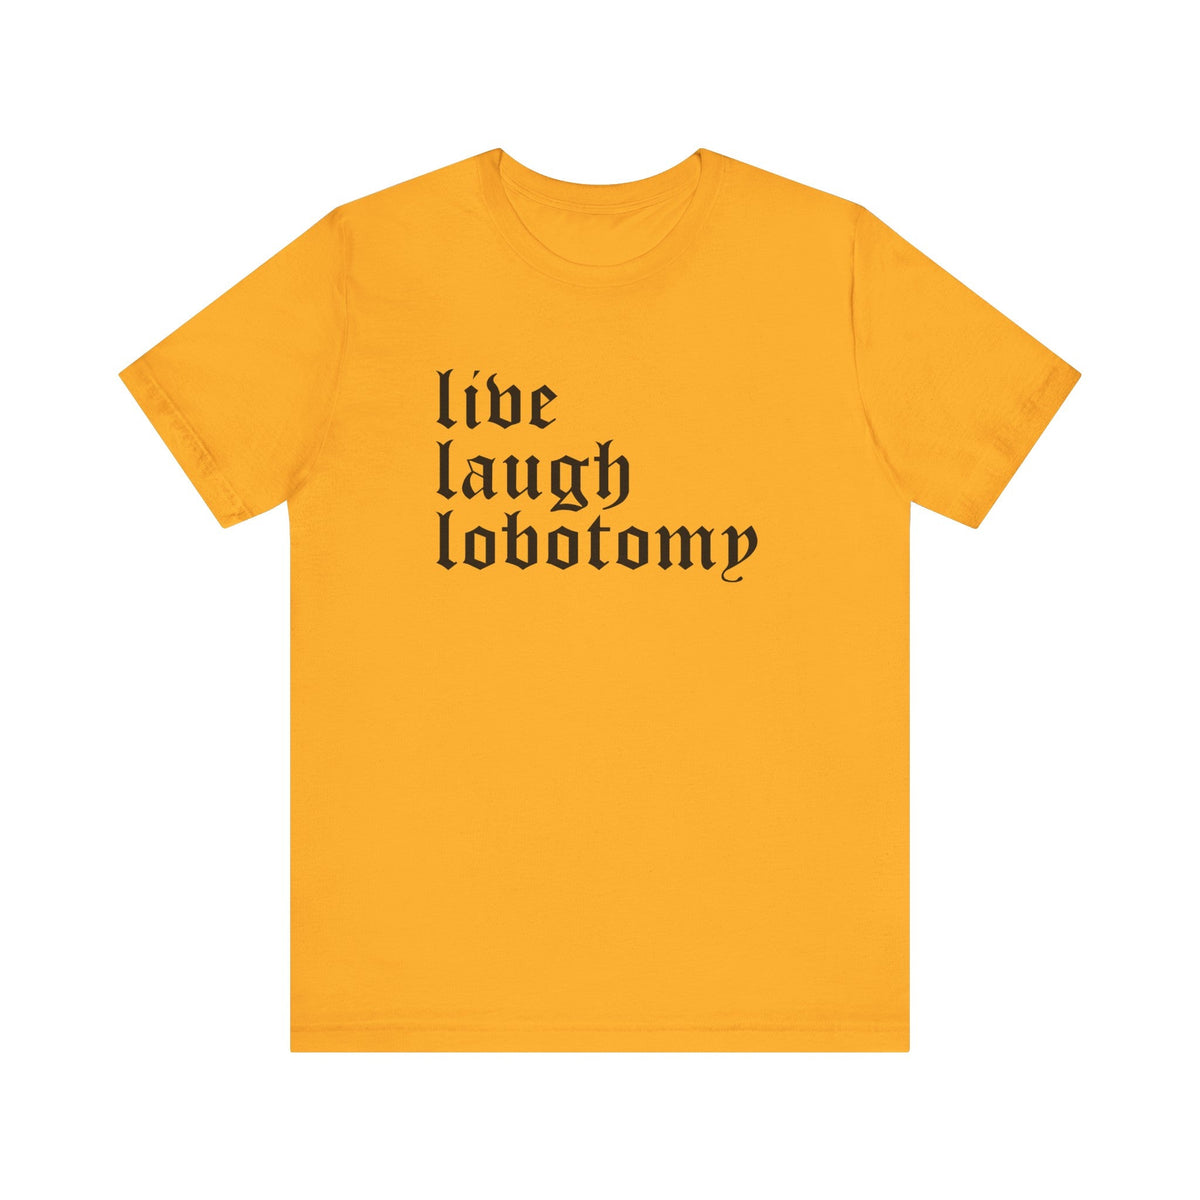 Live Laugh Lobotomy Short Sleeve Tee - Goth Cloth Co.T - Shirt24096476957943070995